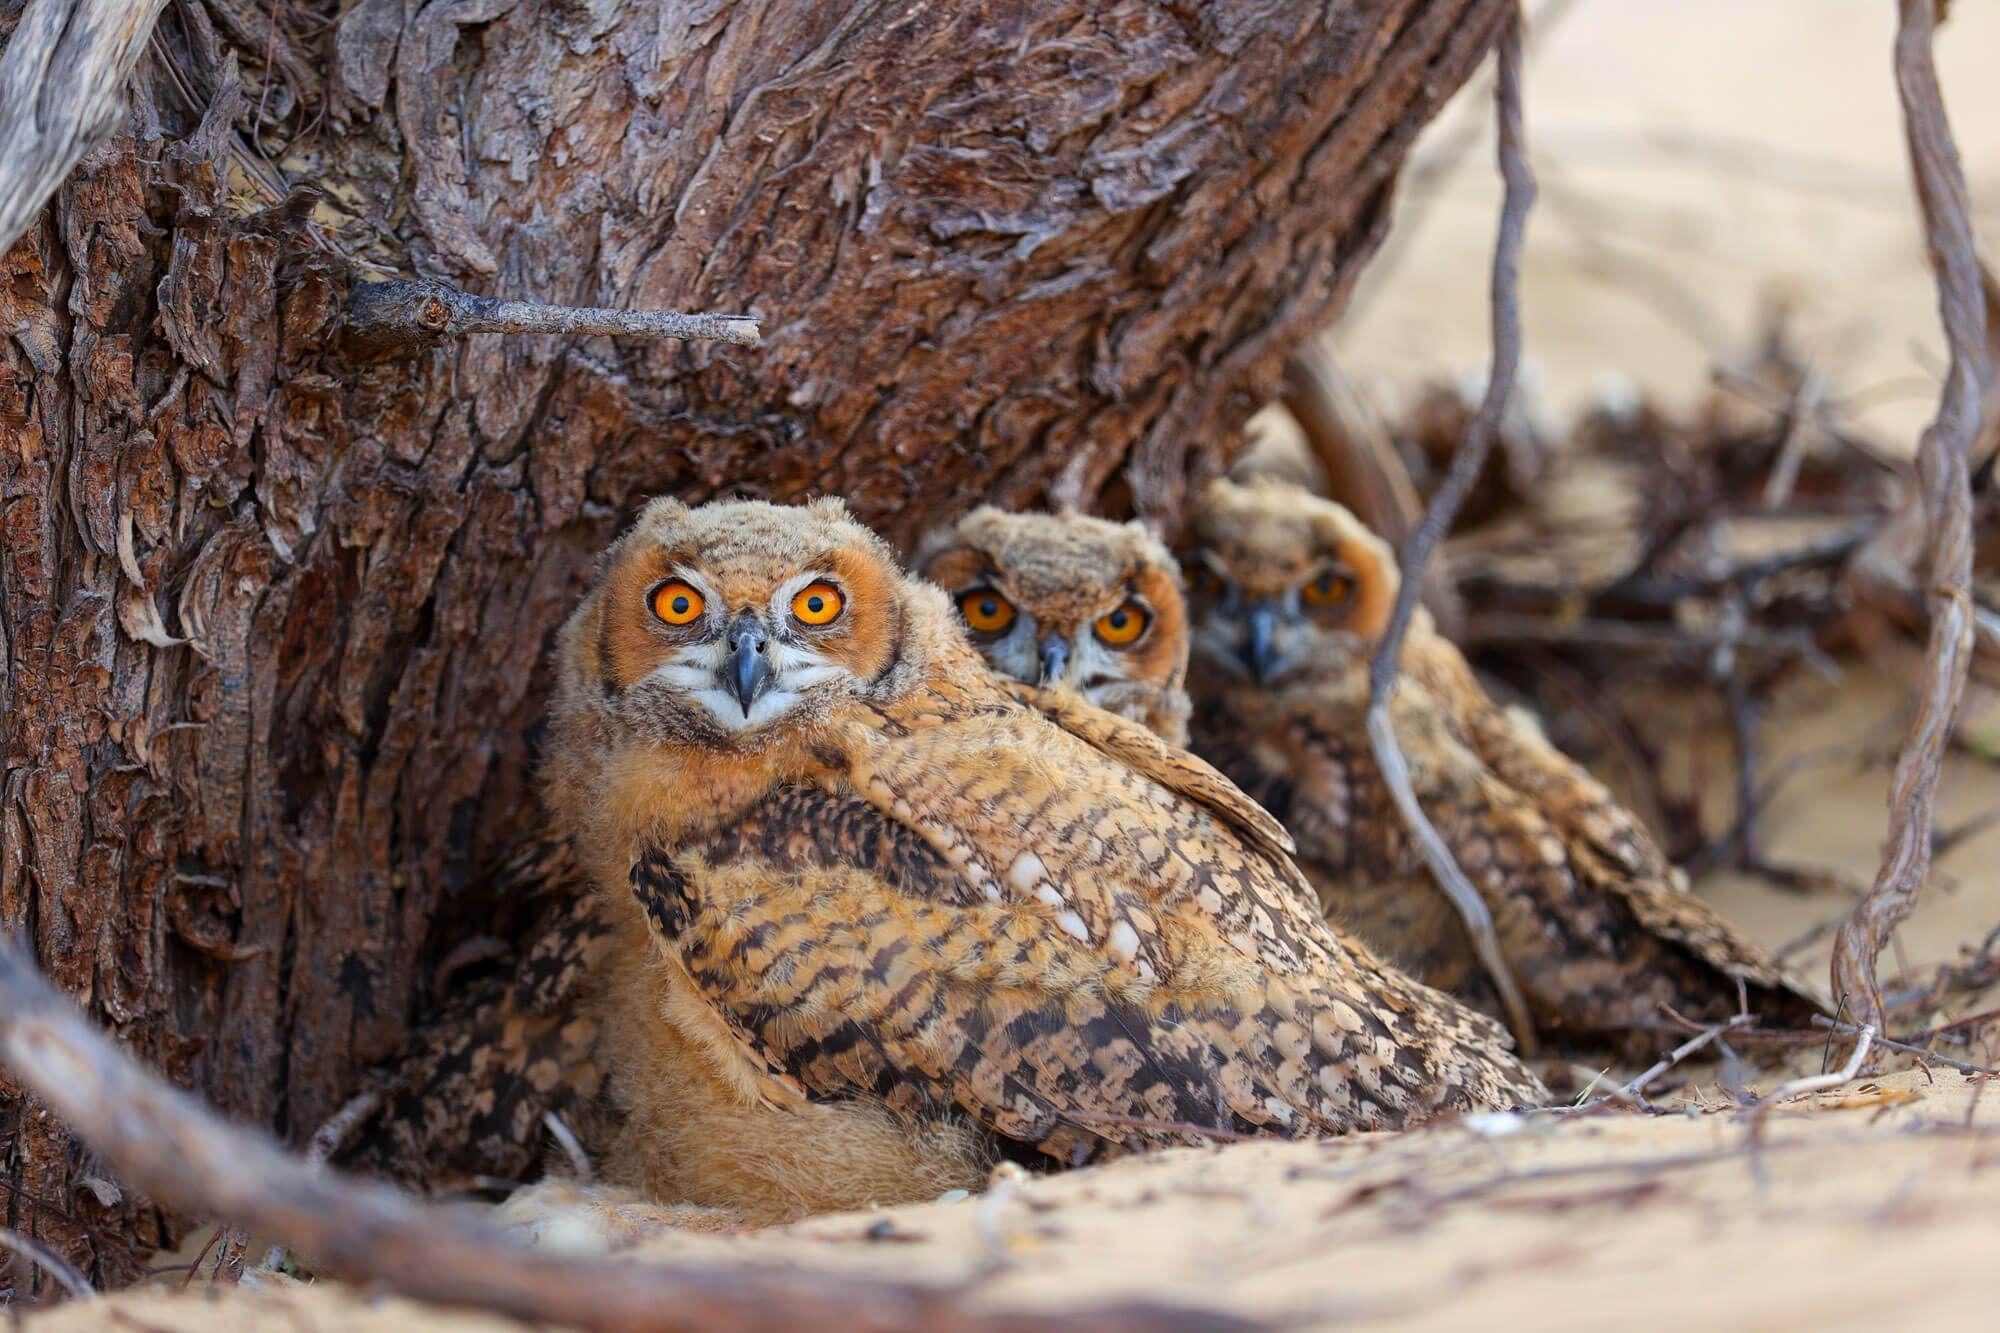 Next generation: the three nestlings matured into Desert Eagle Owls. Photographer: Ali bin Thalith. Location: Al Qudra Lake, Dubai, United Arab Emirates. 